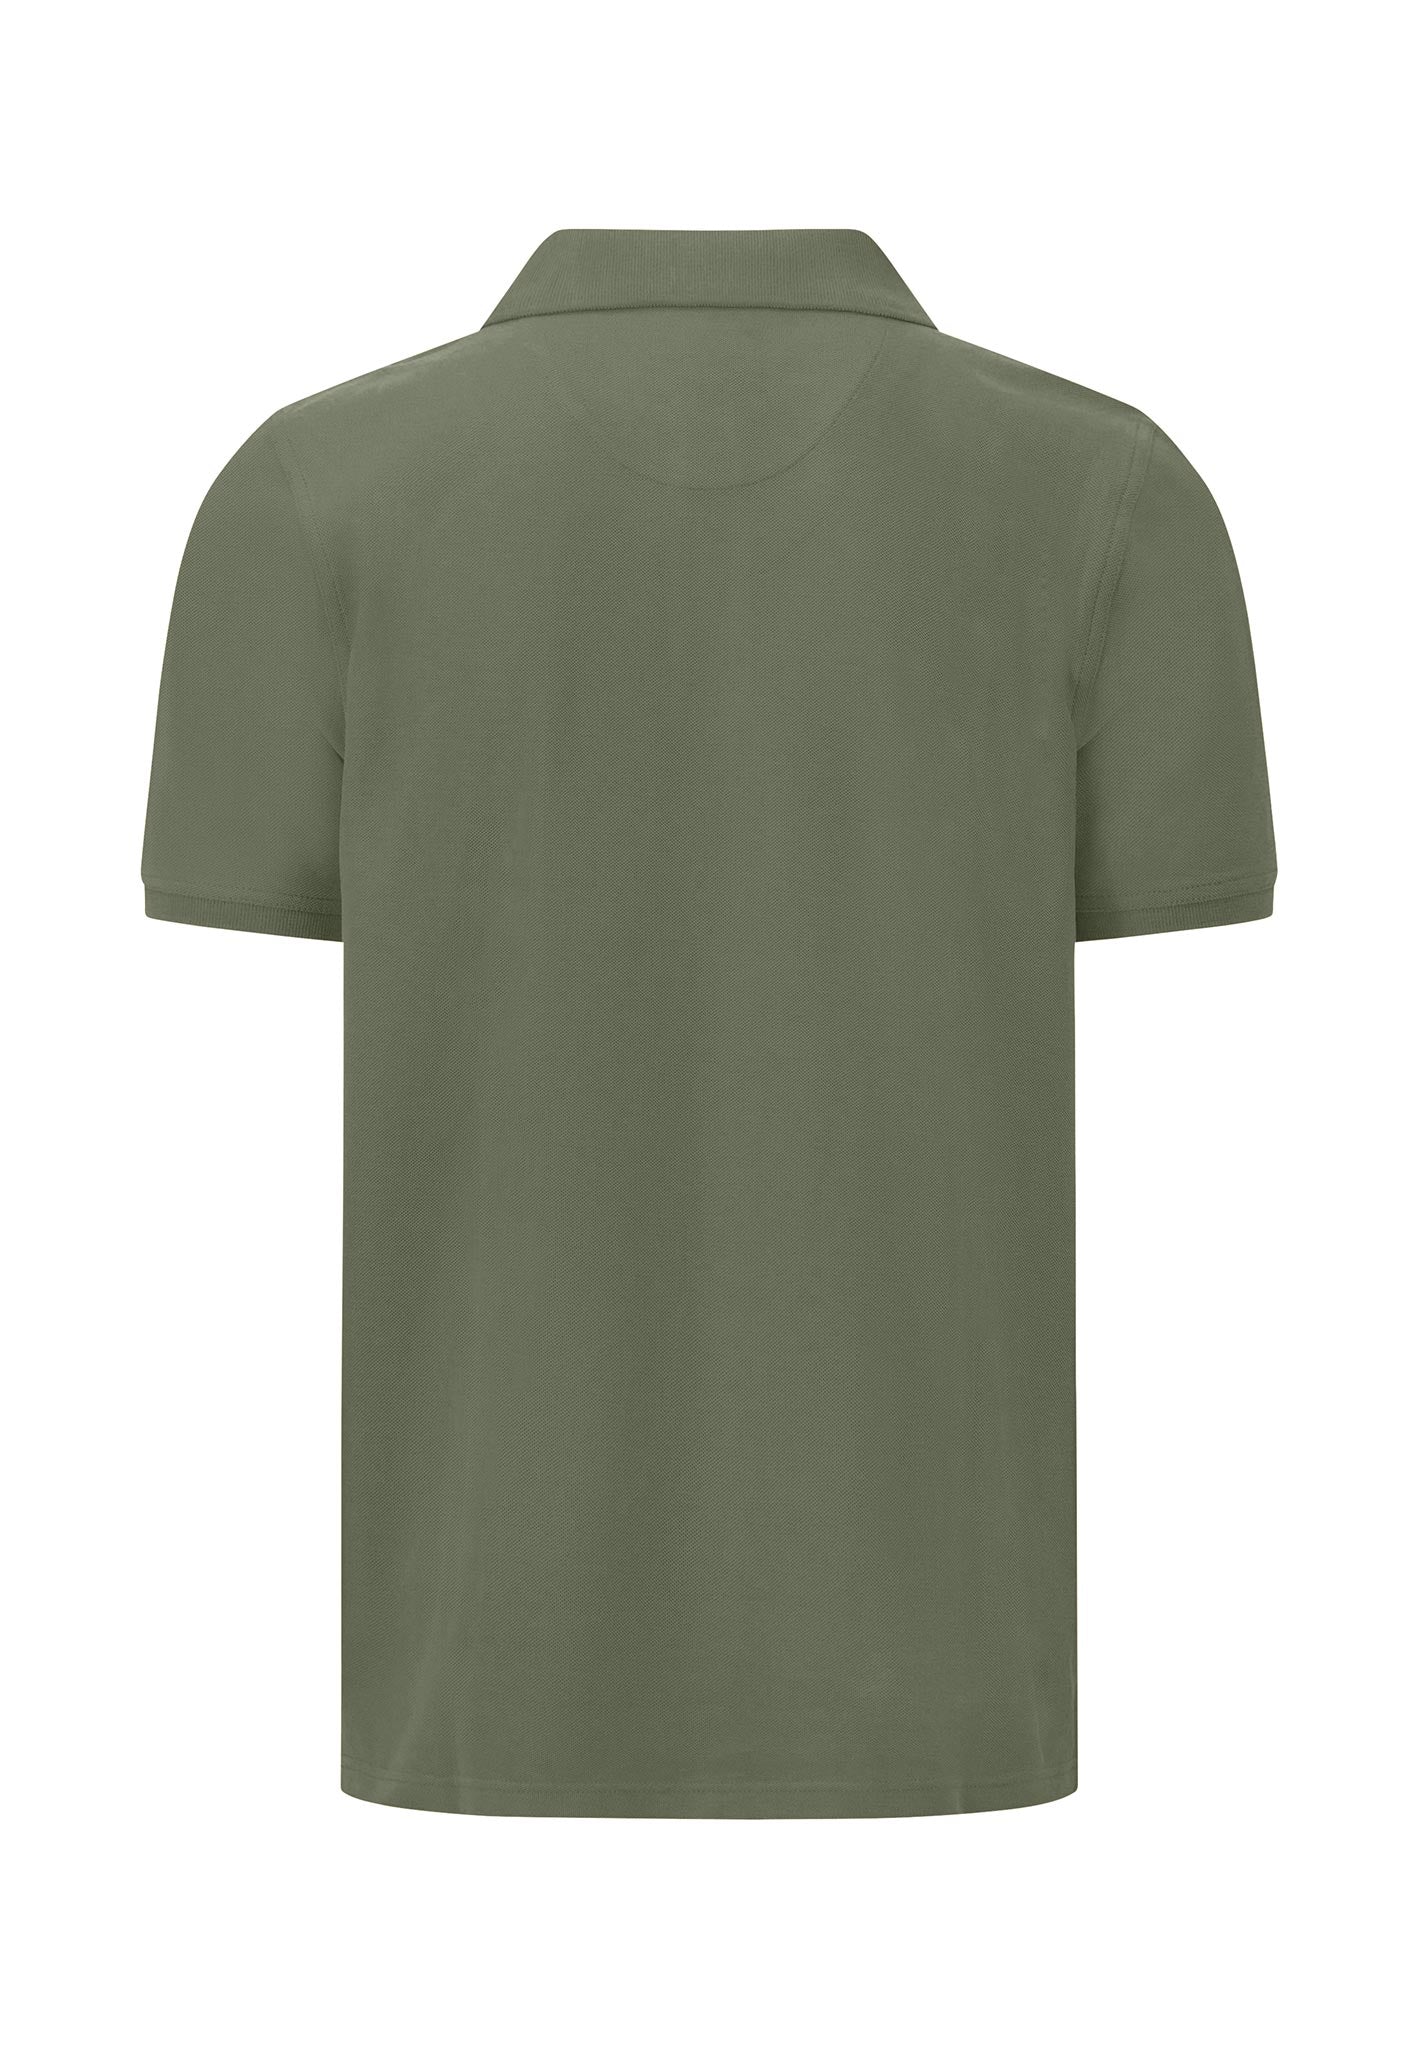 FYNCH HATTON Polo Shirt, Olive Green